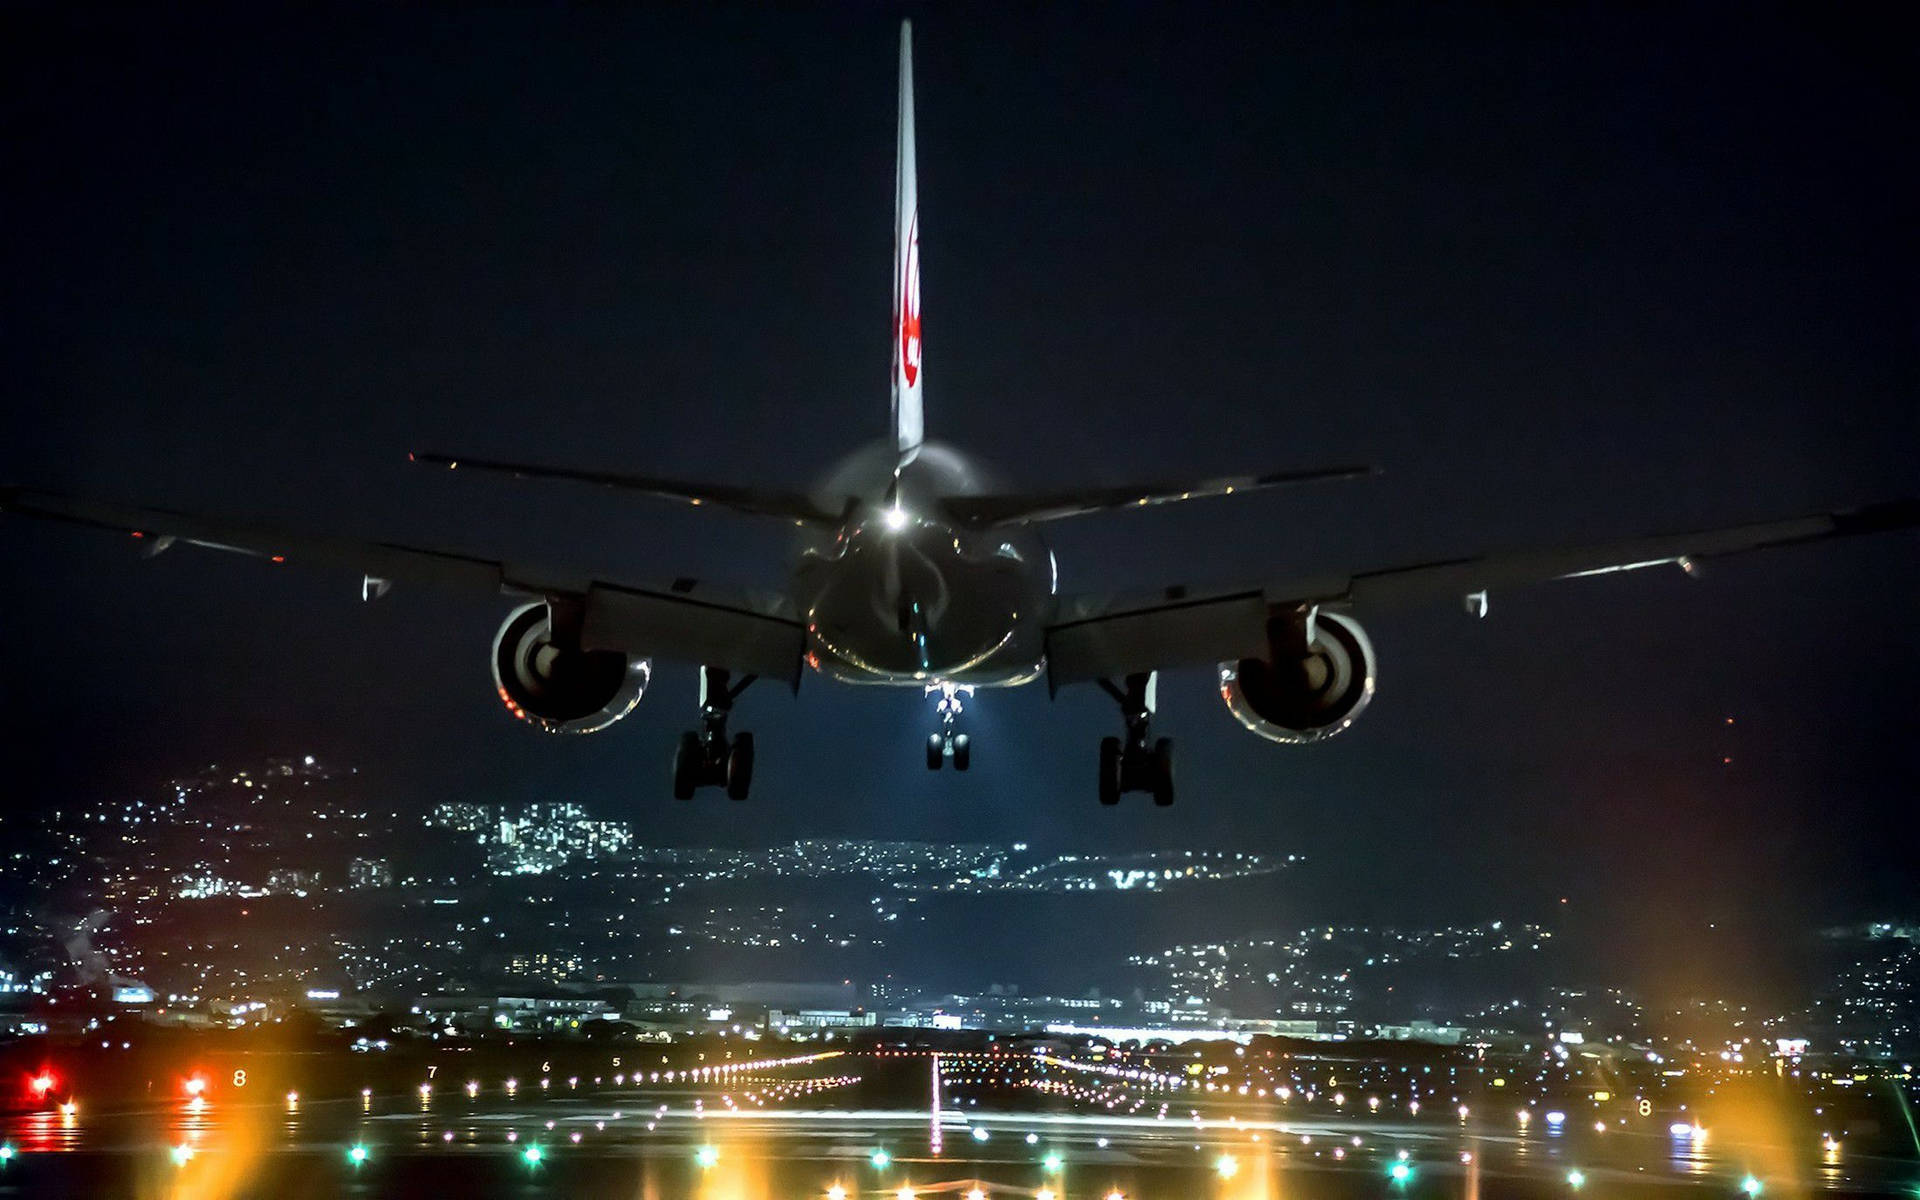 Airplane At Night